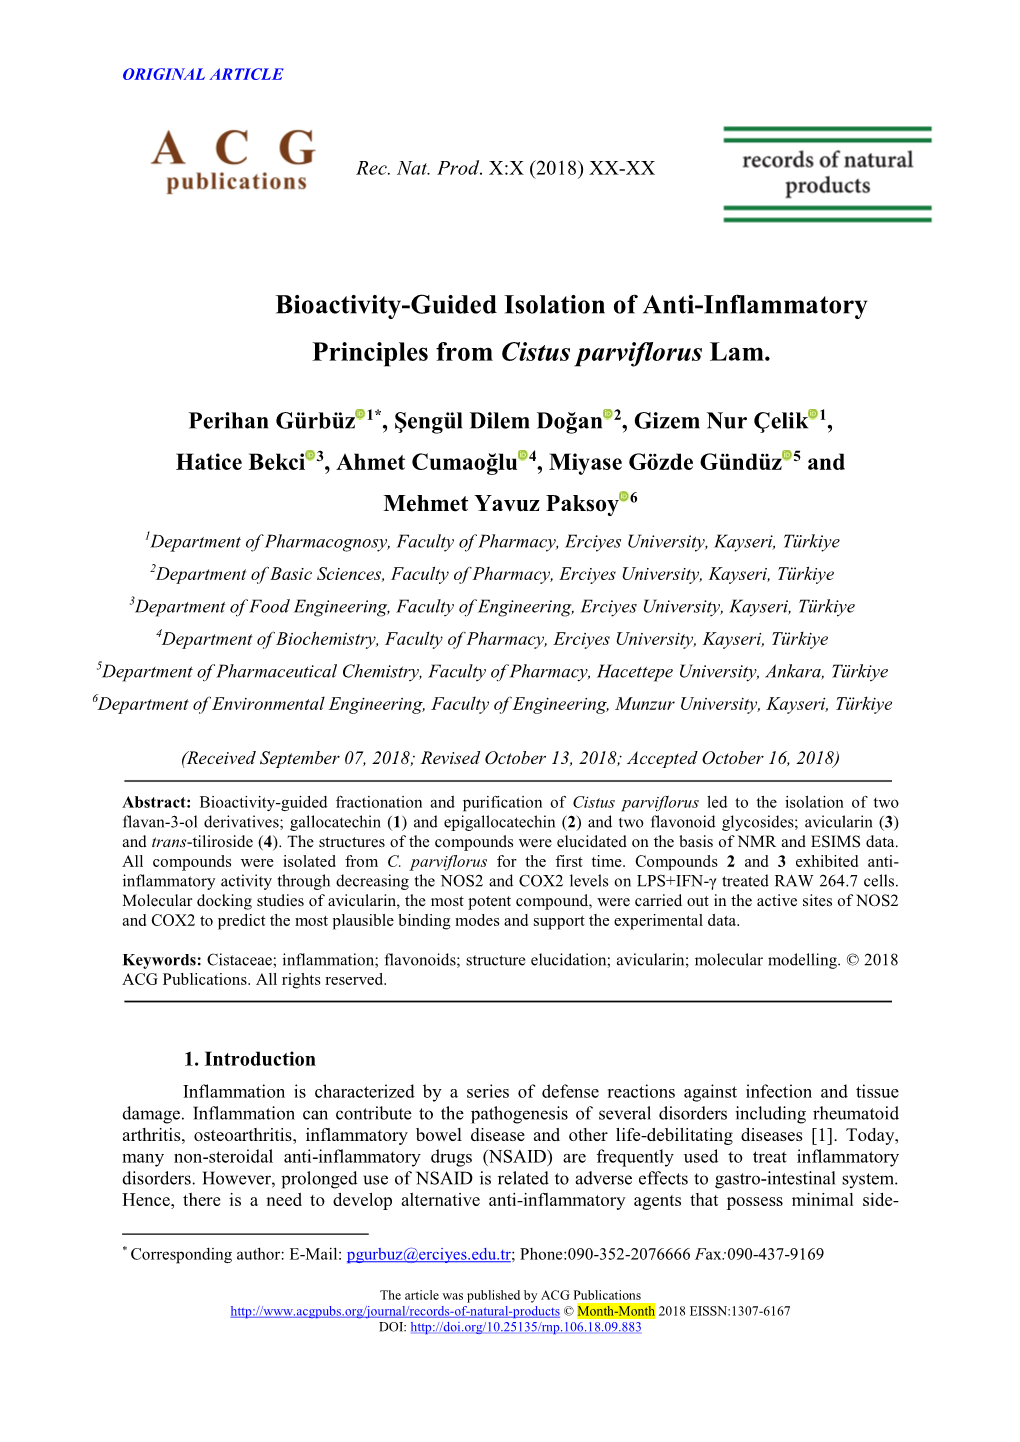 Bioactivity-Guided Isolation of Anti-Inflammatory Principles from Cistus Parviflorus Lam